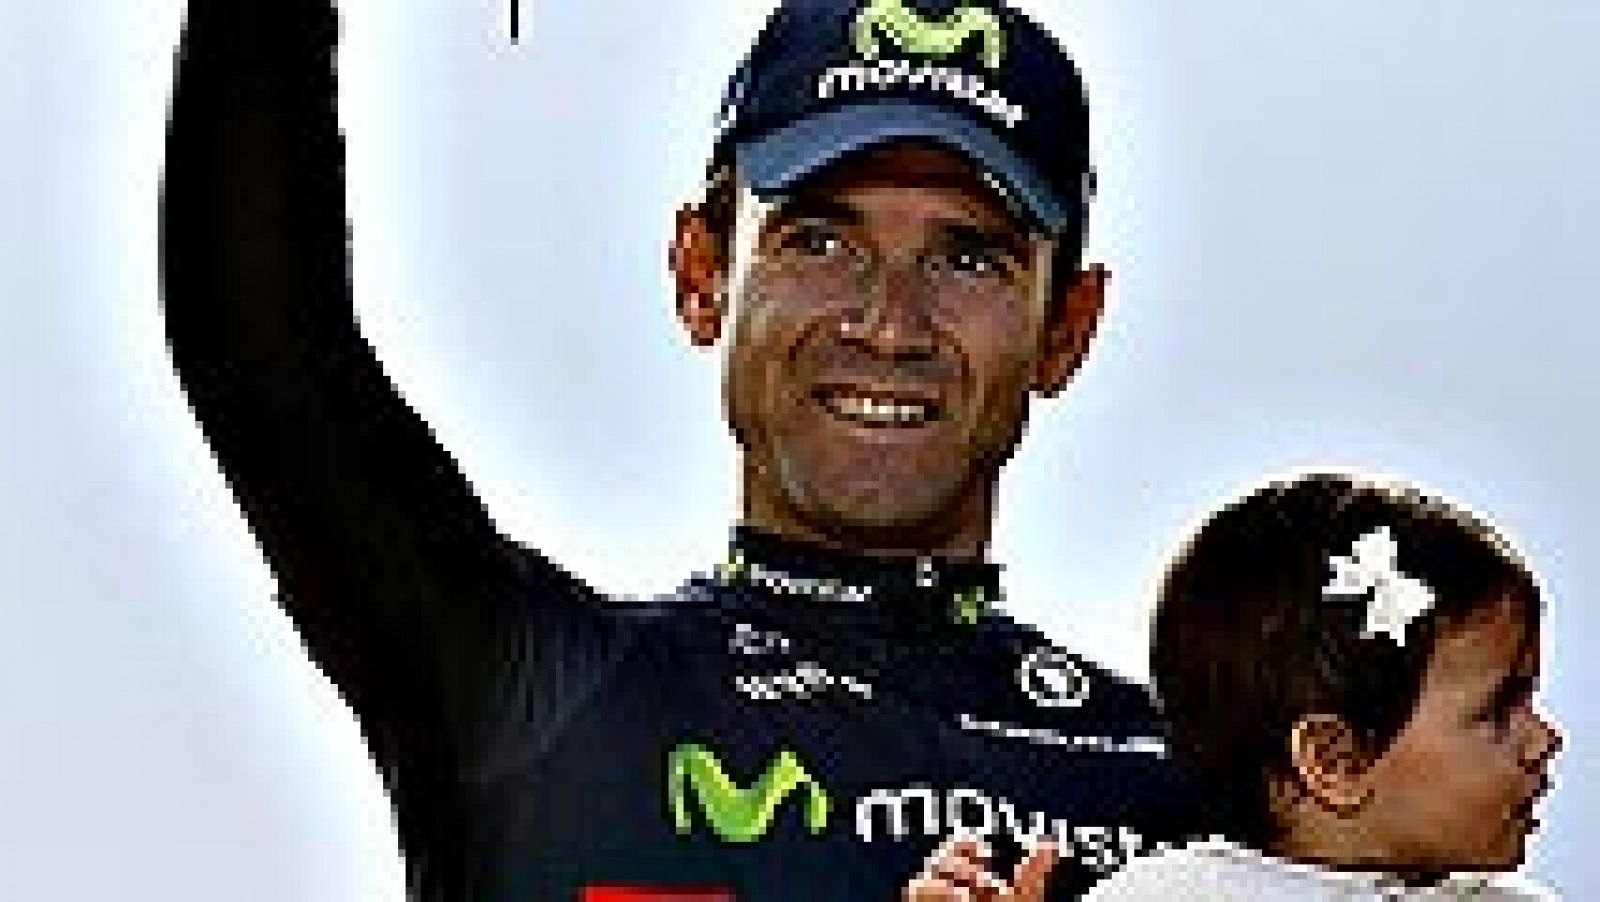 Tour de Francia: Valverde: "El Tour es especial, ahora me falta un Mundial" | RTVE Play